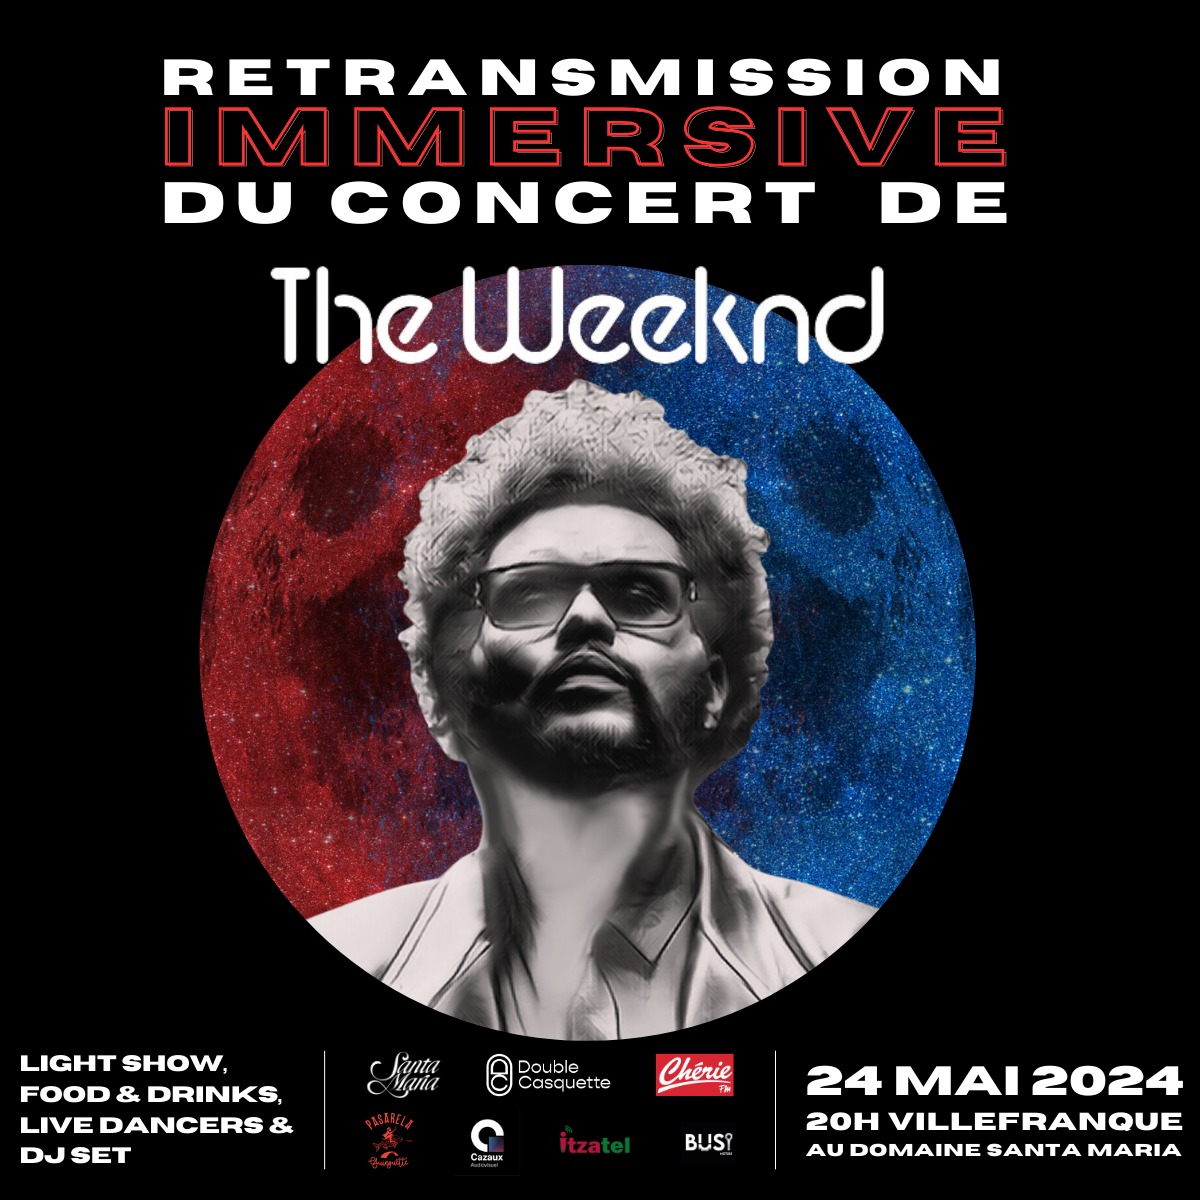 Retransmission Immersive du concert de The Weeknd